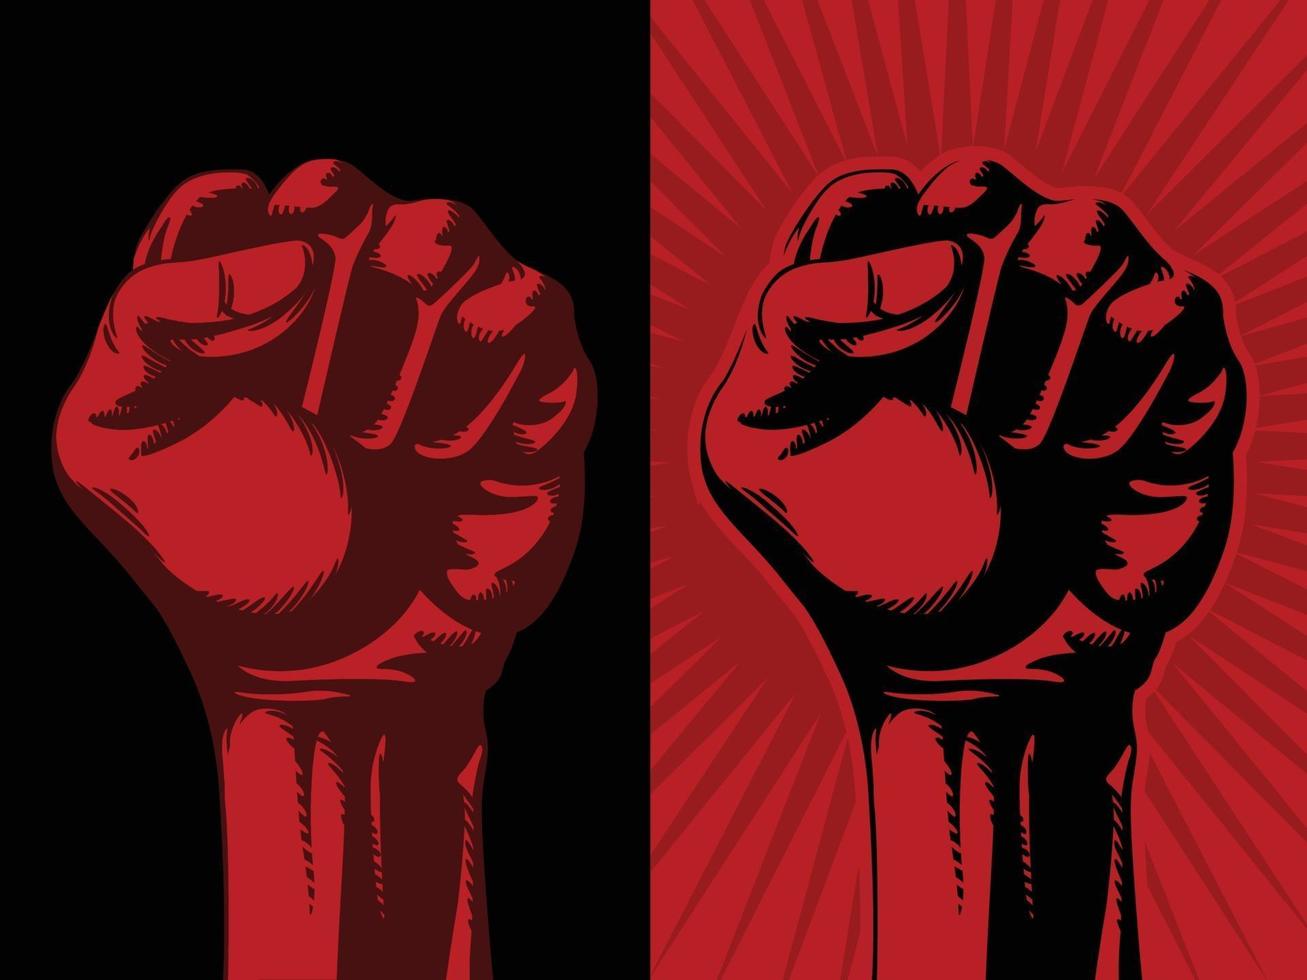 Raised Red Fist Hand Revolution Communism Socialism Symbol Drawing vector